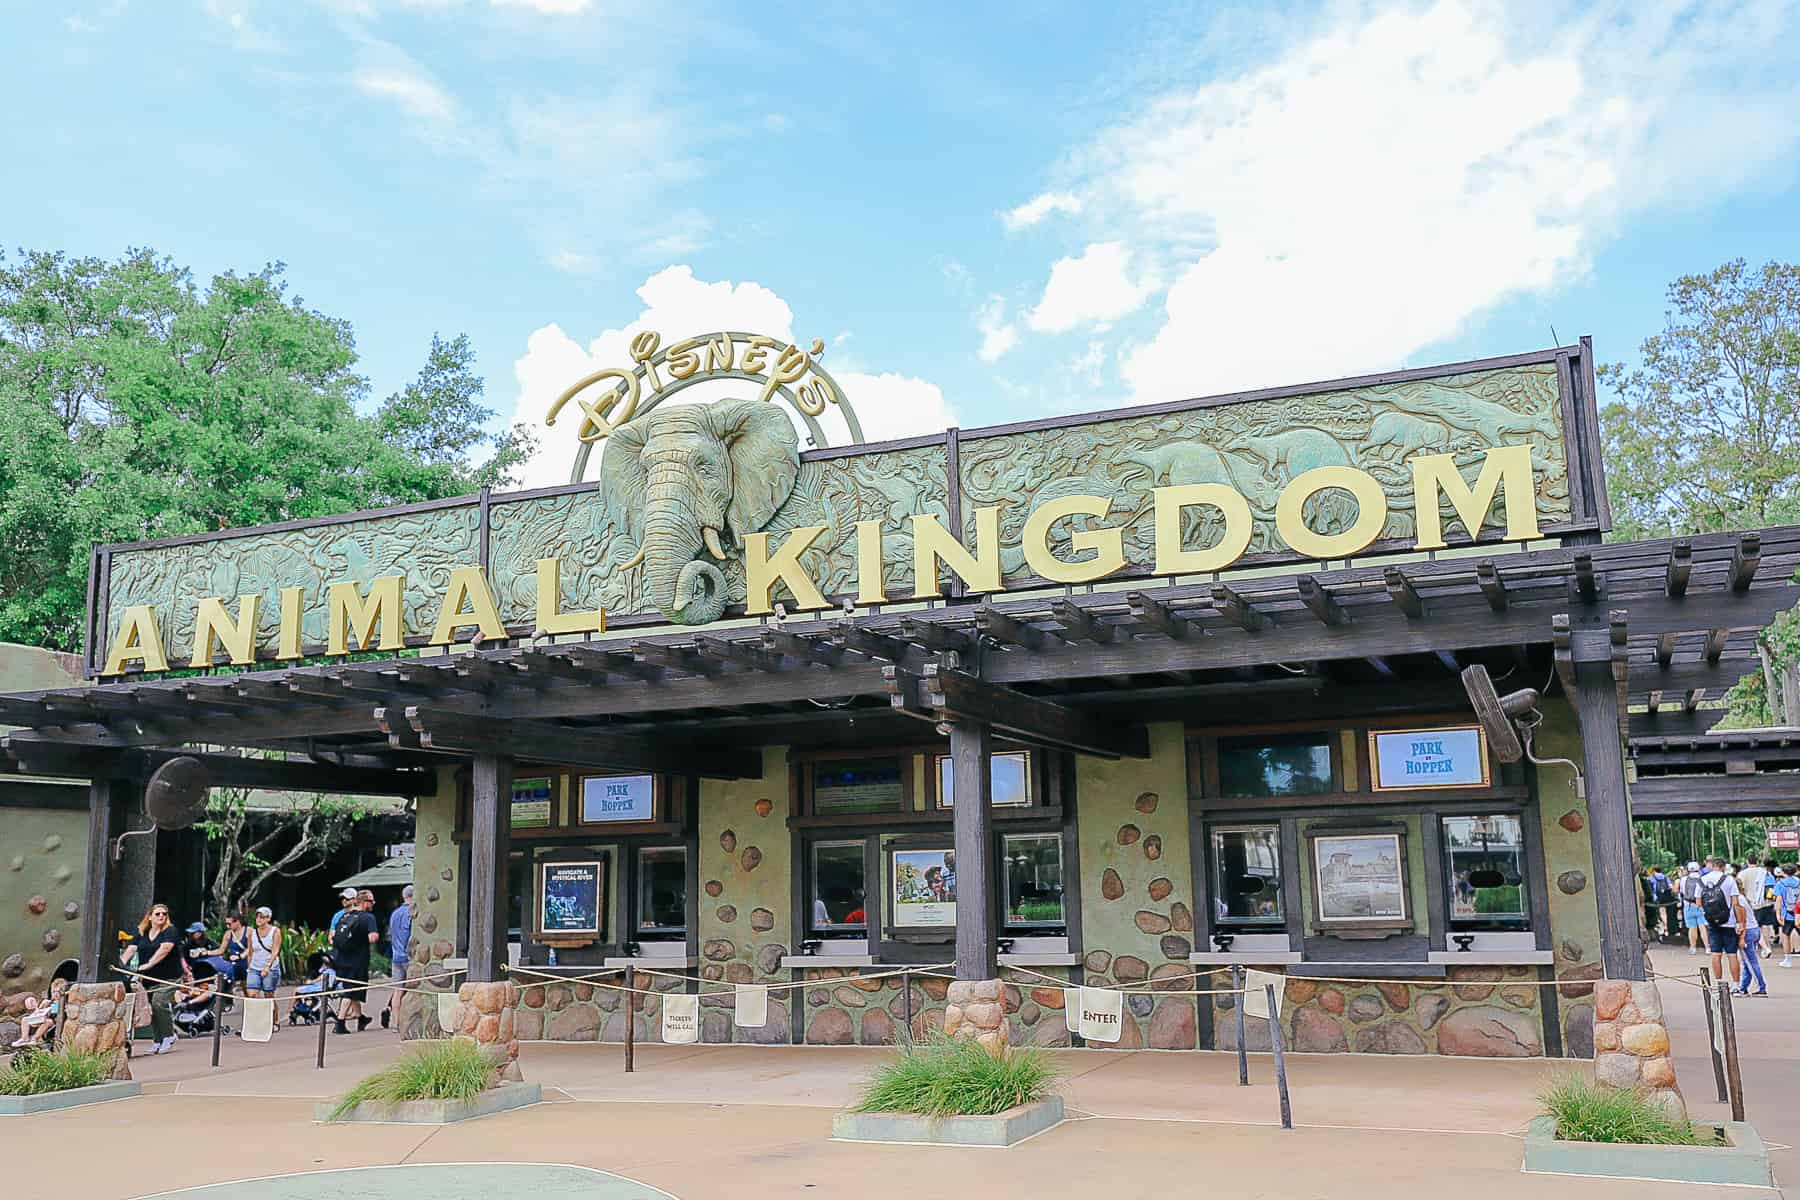 the entrance sign at Disney's Animal Kingdom 